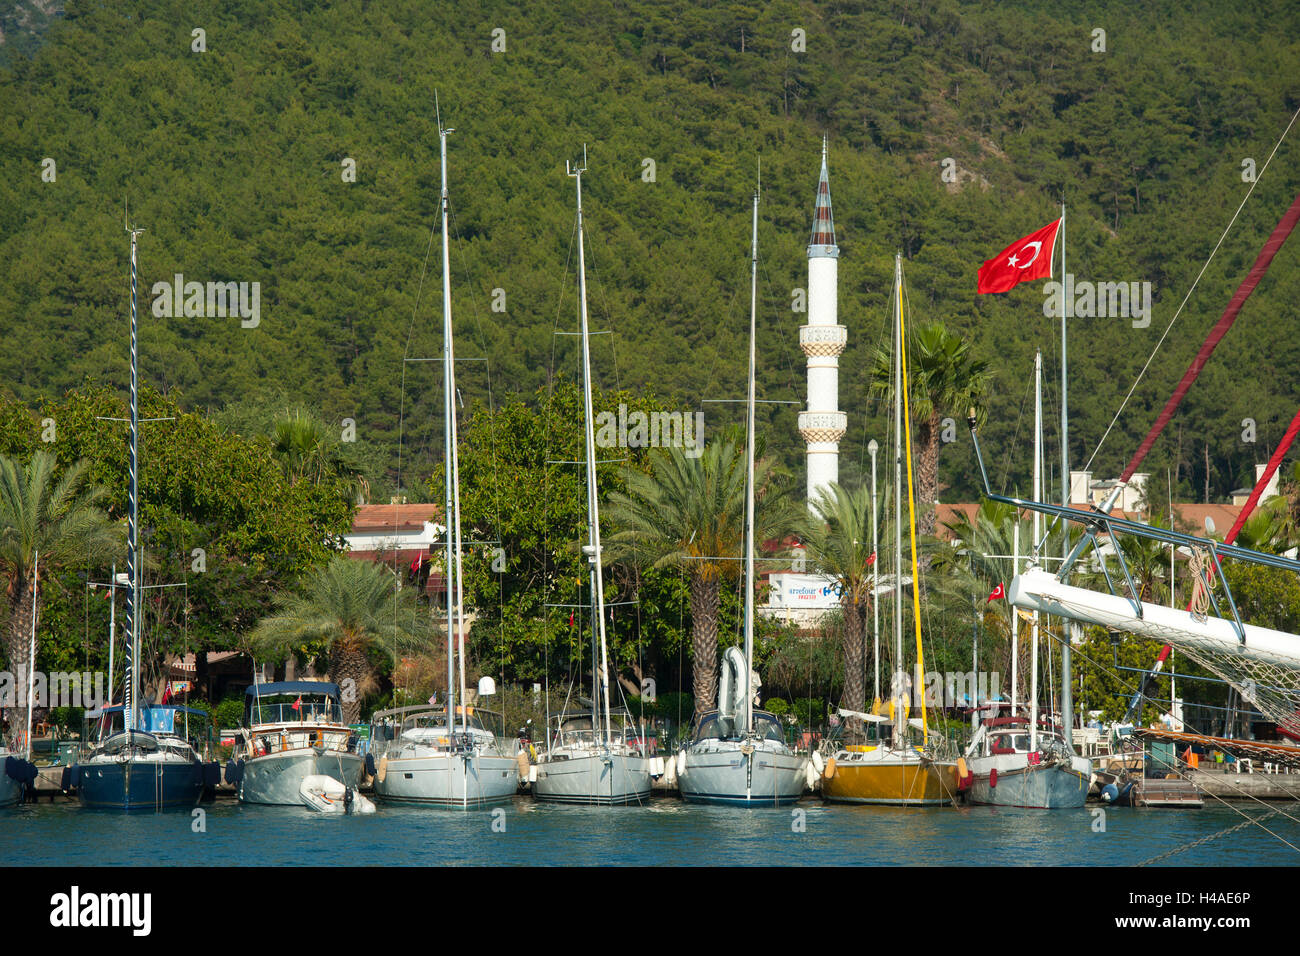 Turkey, province of Mugla, Göcek is one of the most popular yacht stations of Turkey, Stock Photo